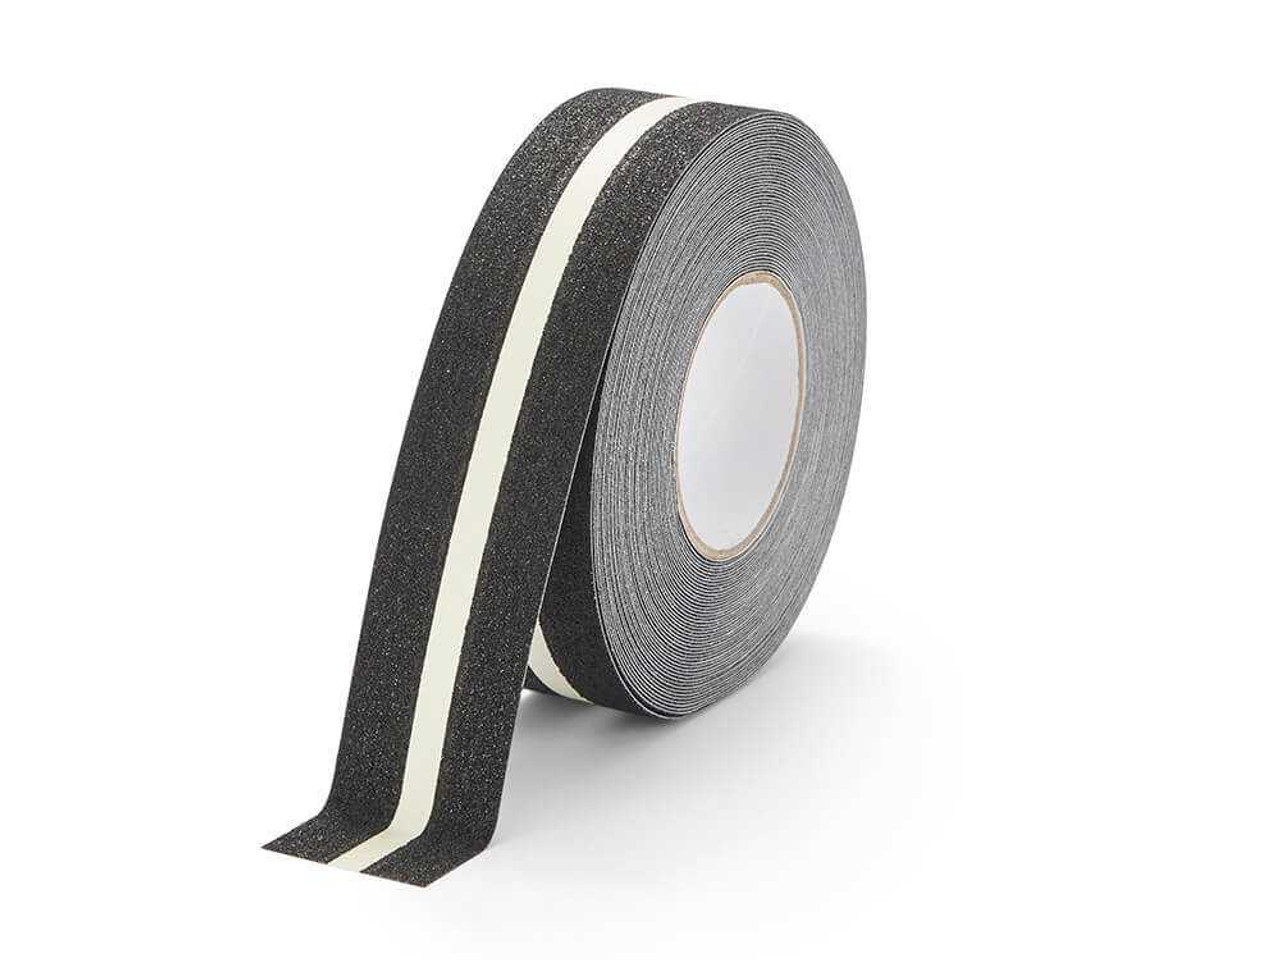 SKID GUARD 2-in x 8-ft Black Roll Anti-Slip Tape in the Anti-Slip Tape  department at